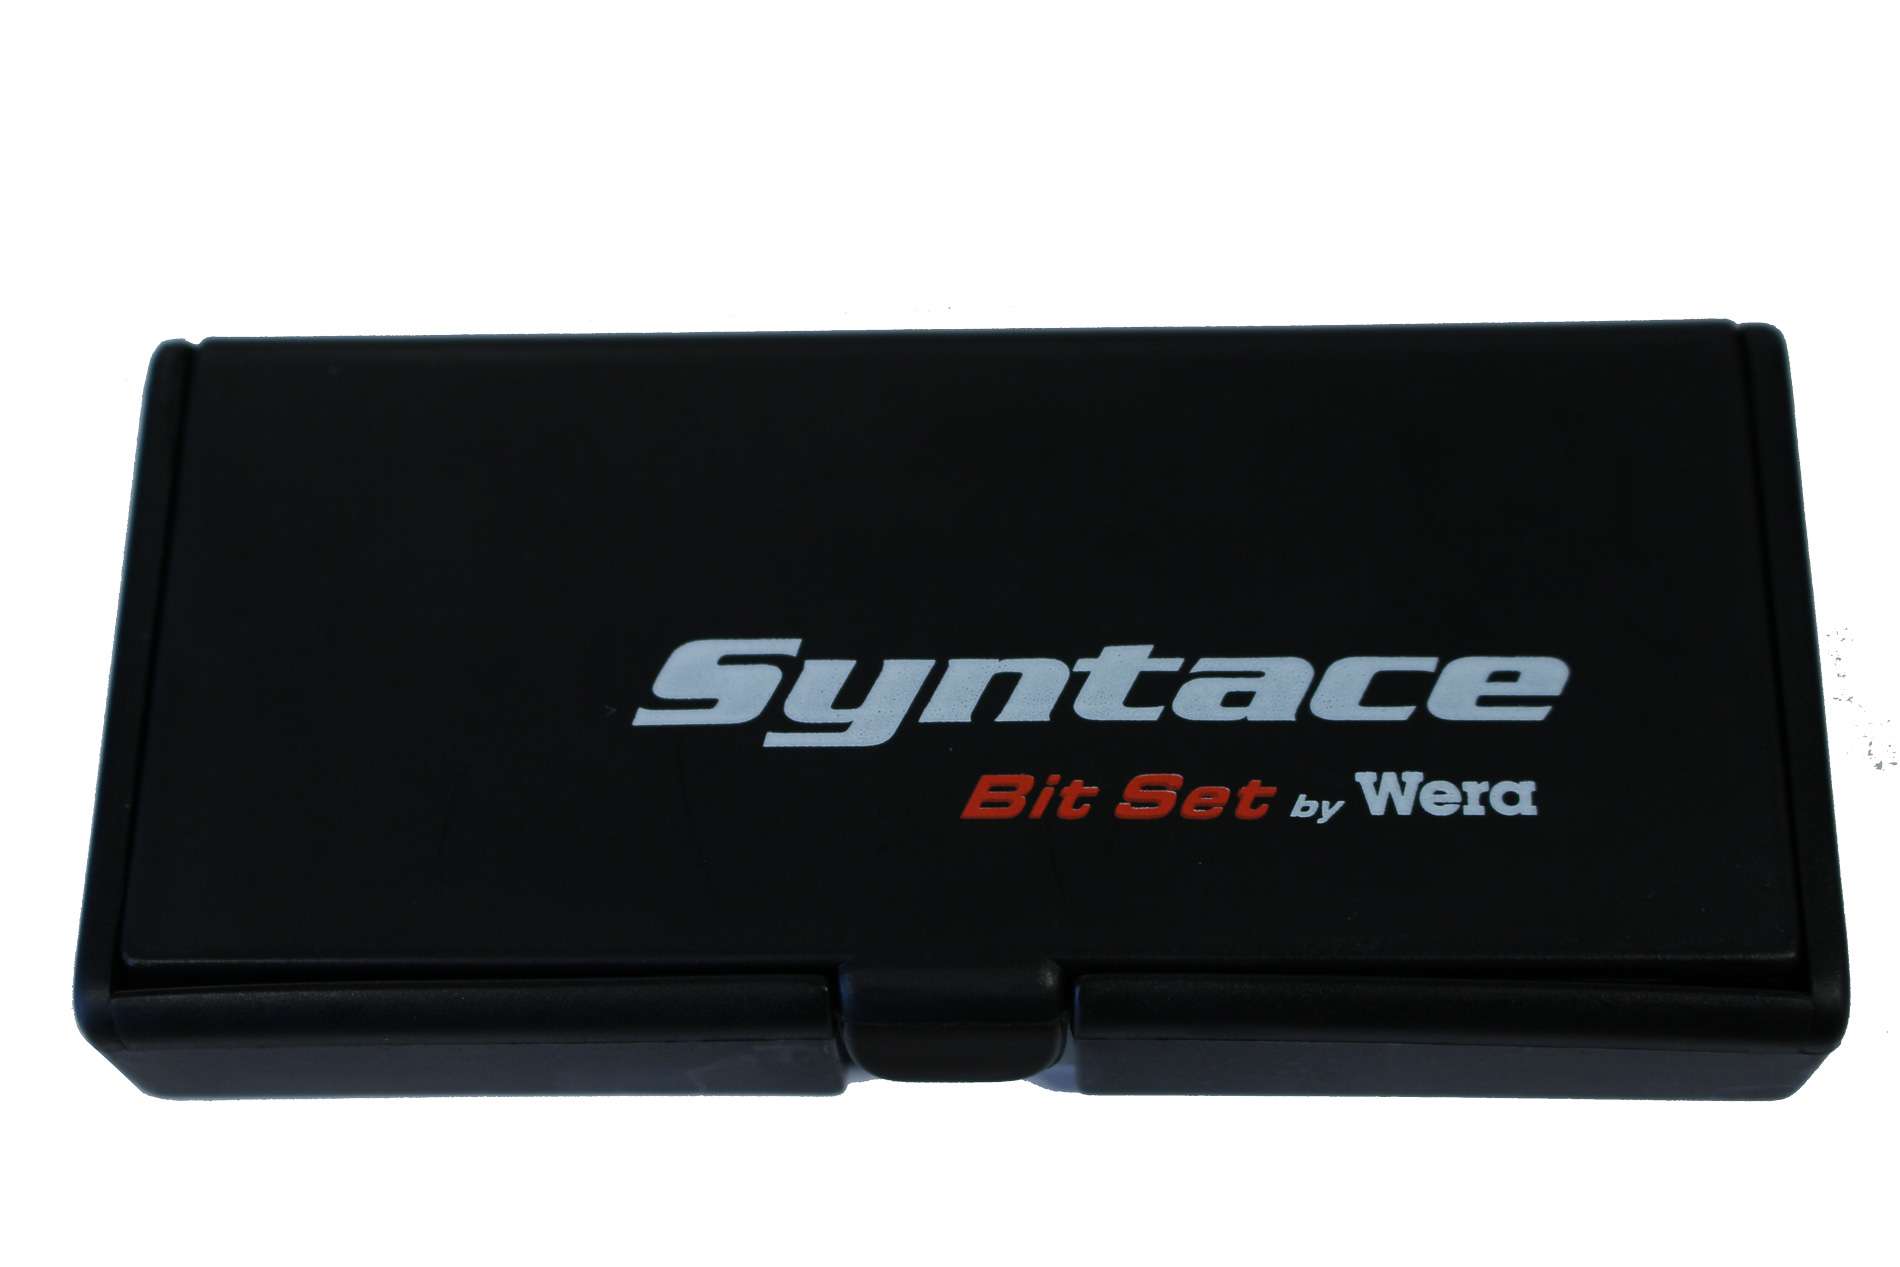 Syntace SW 2-8 Bitset